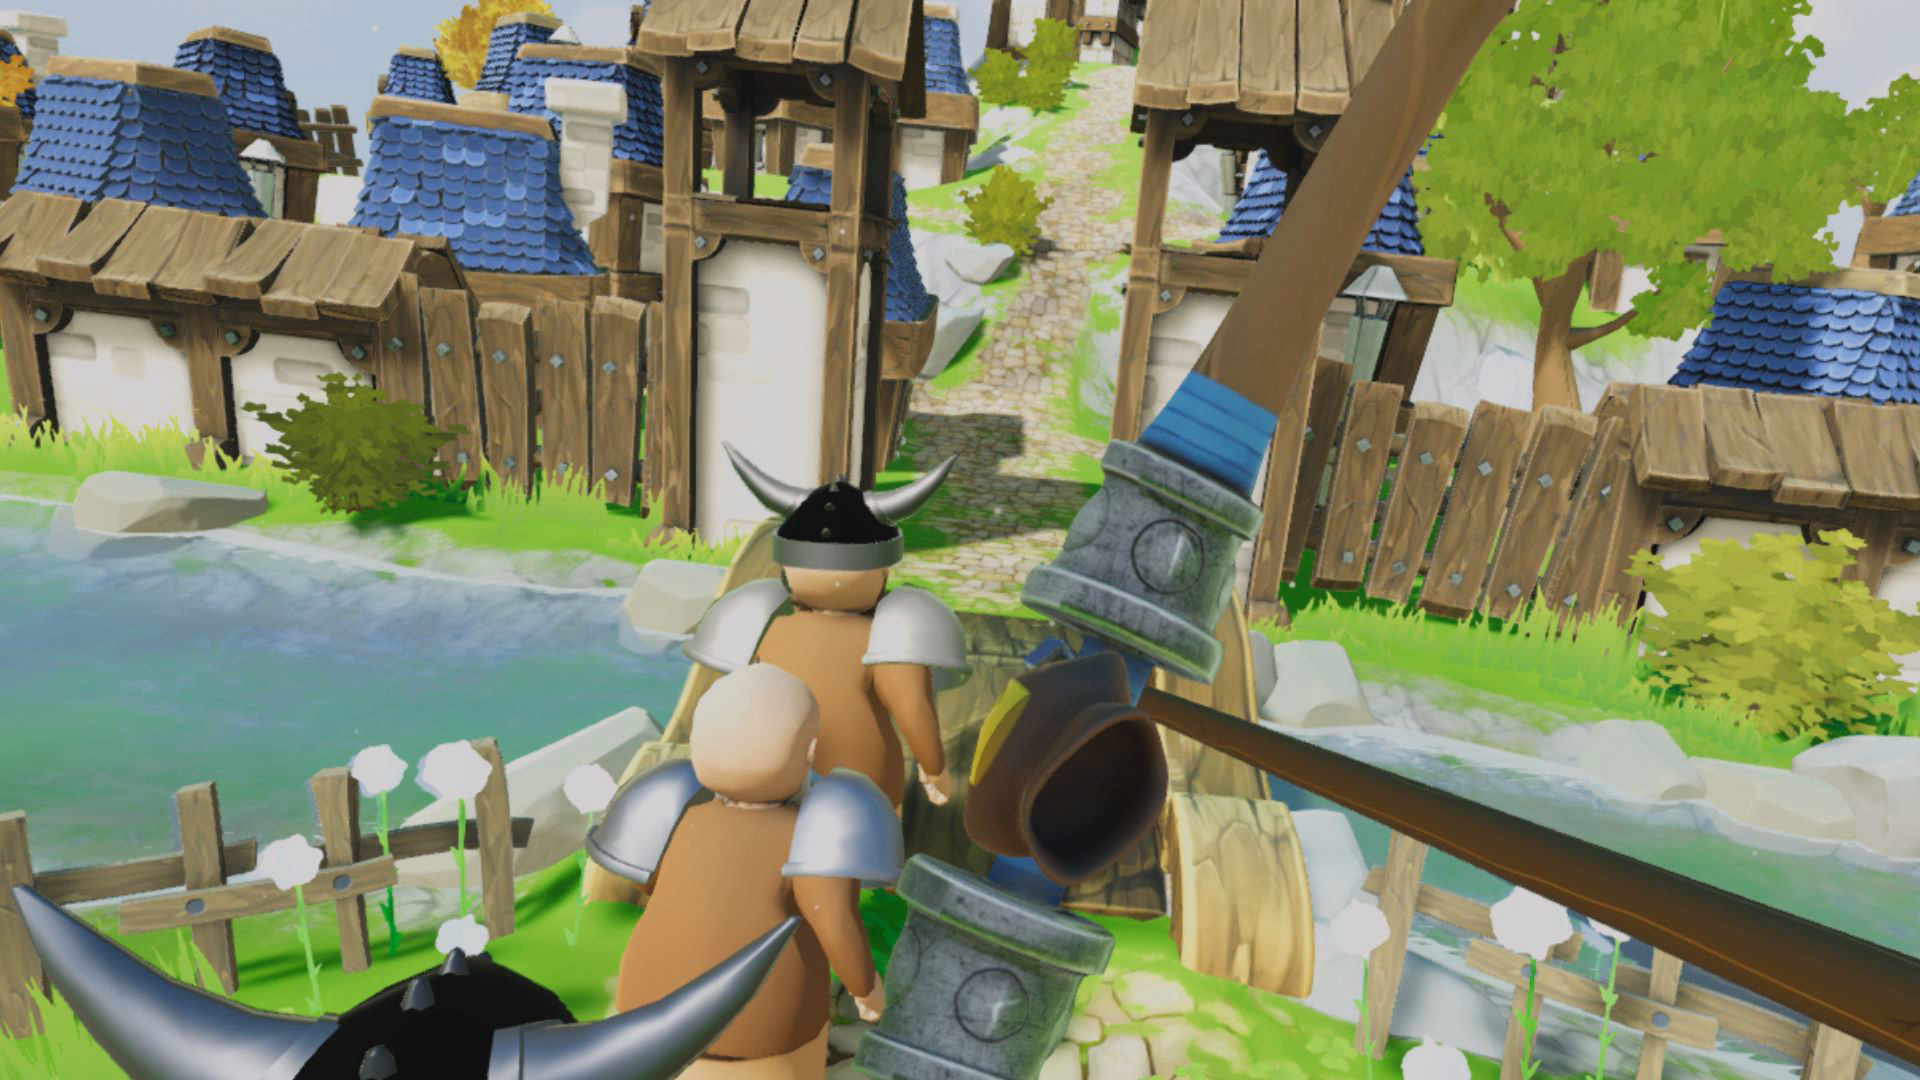 King of my Castle VR screenshot